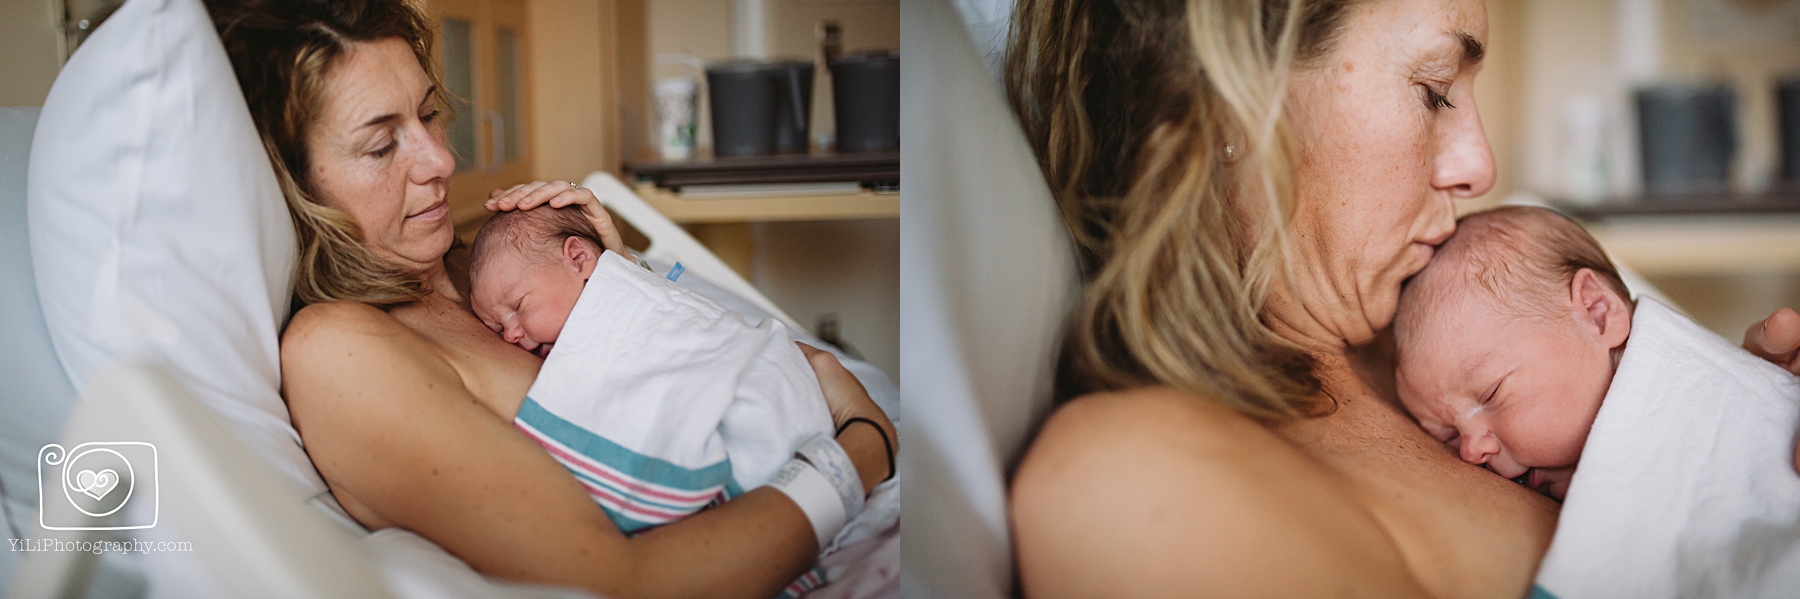 seattle hospital newborn photos